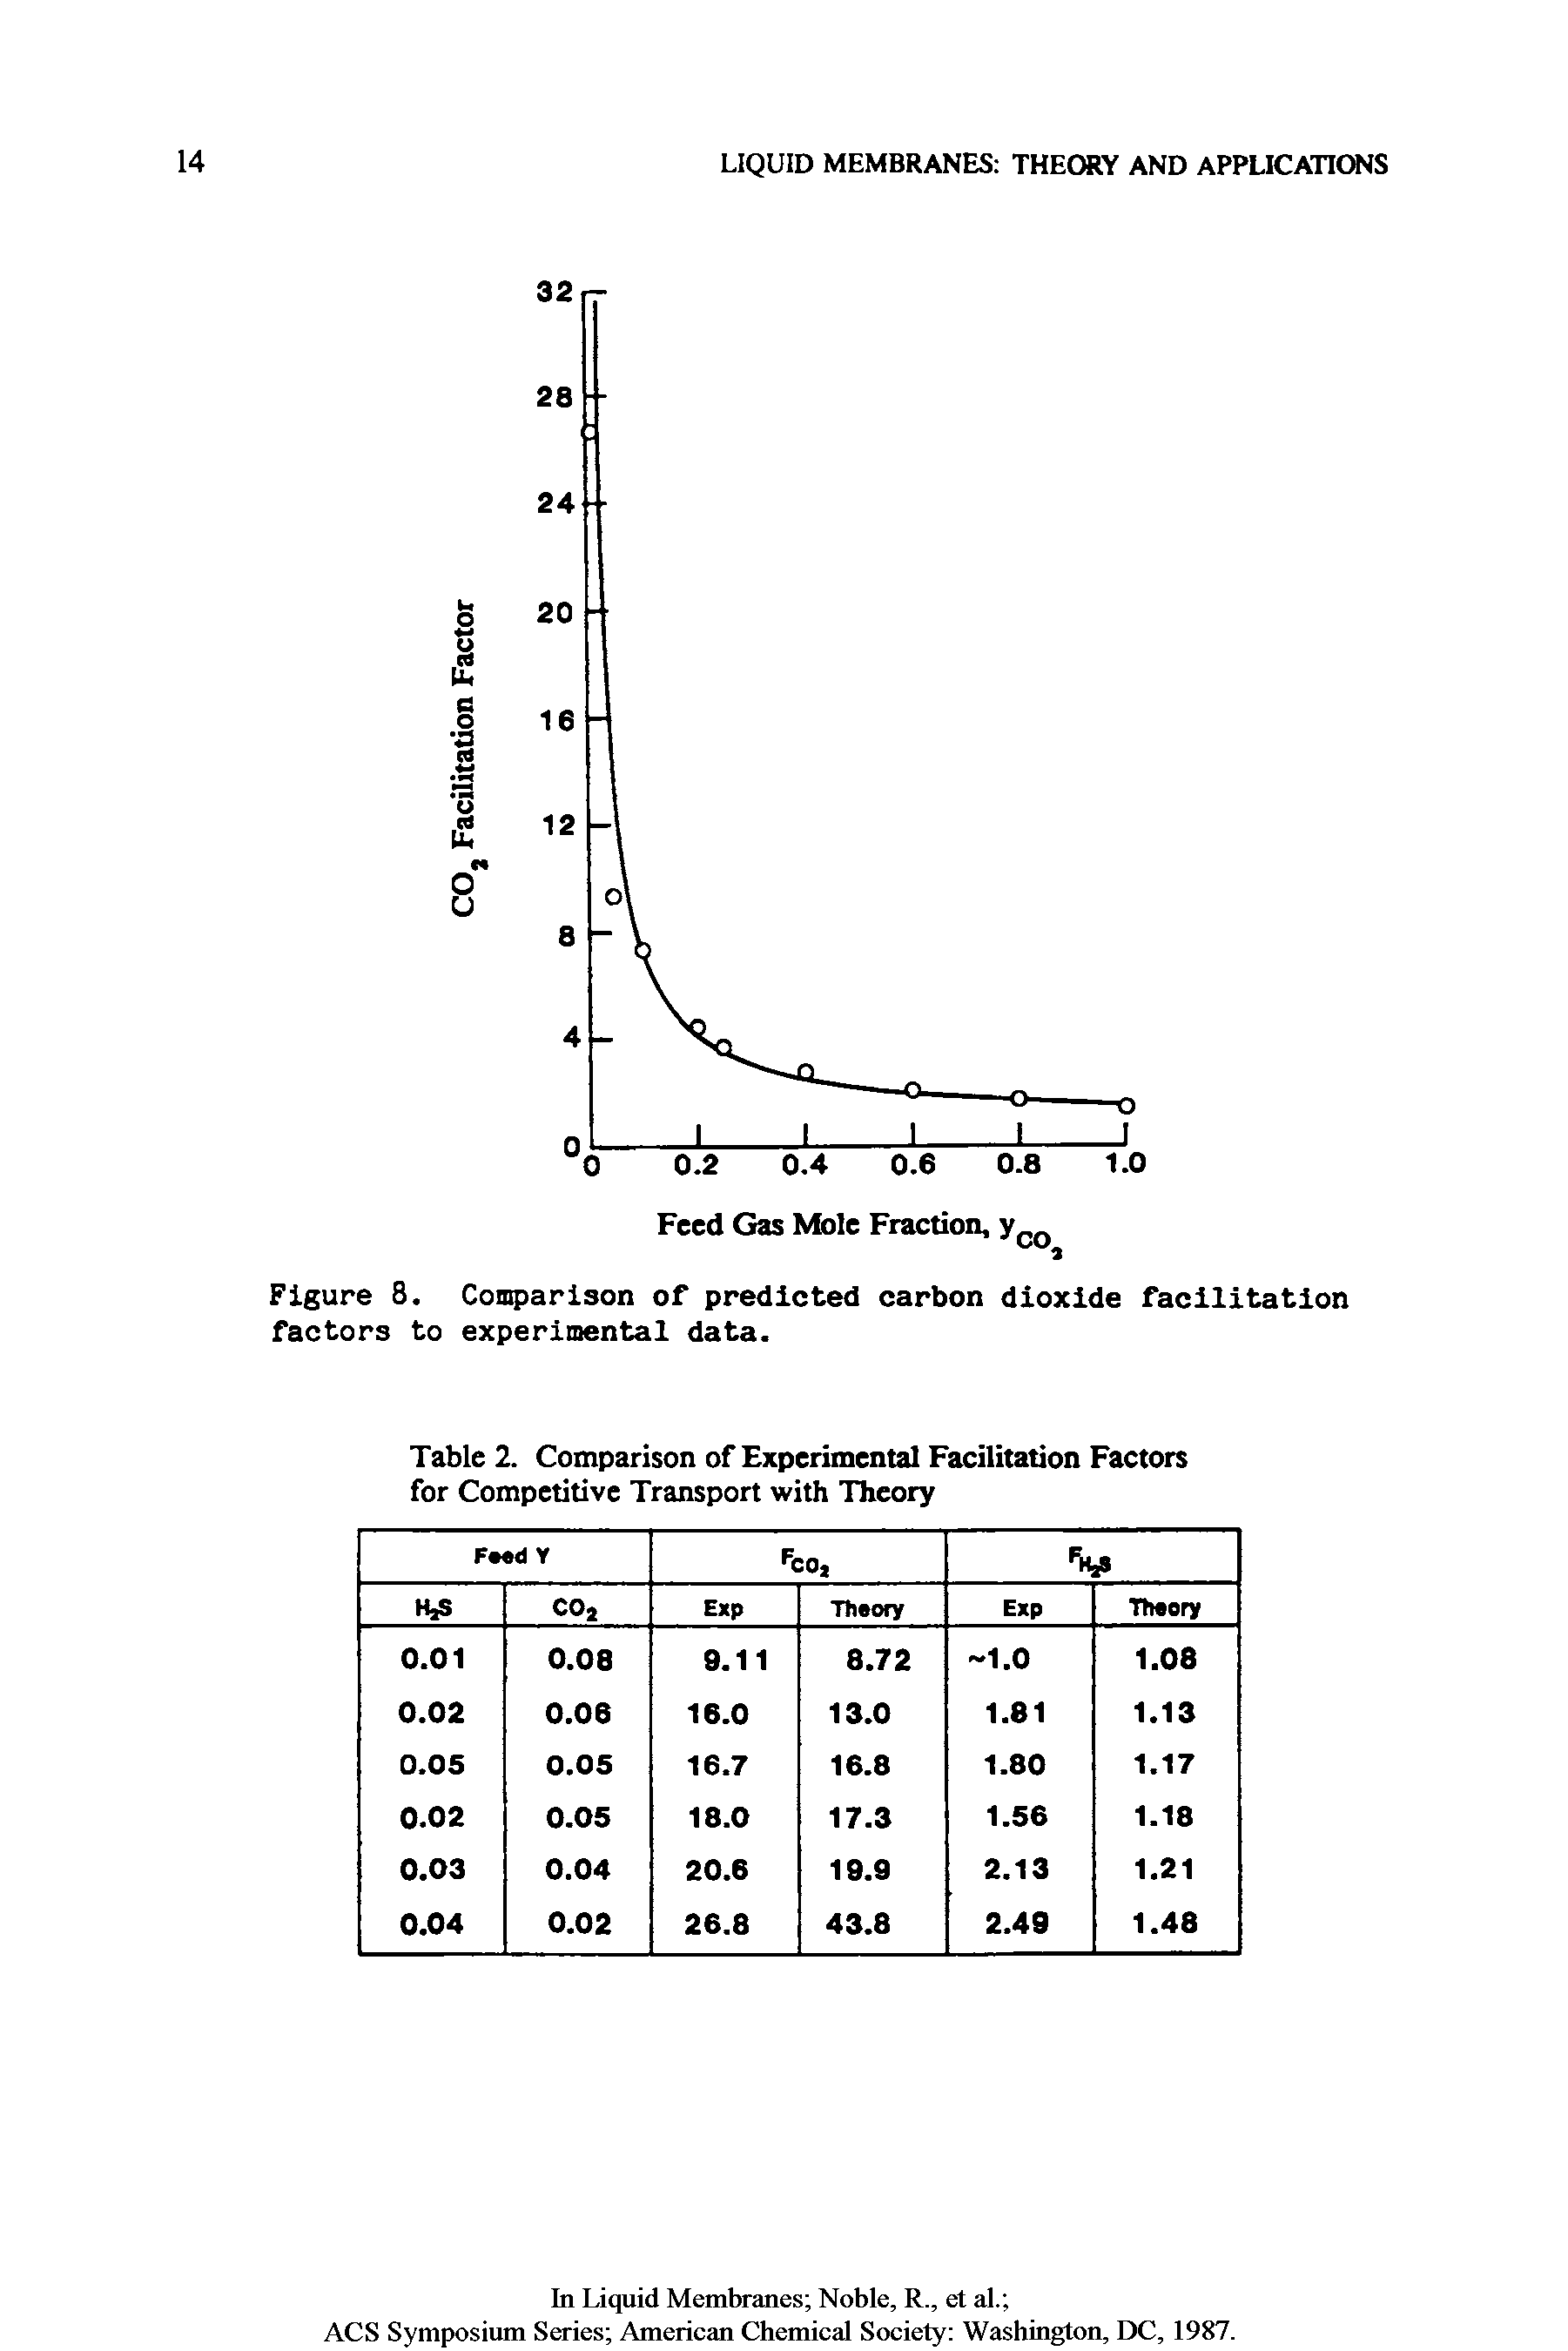 Figure 8. Comparison of predicted carbon dioxide facilitation factors to experimental data.